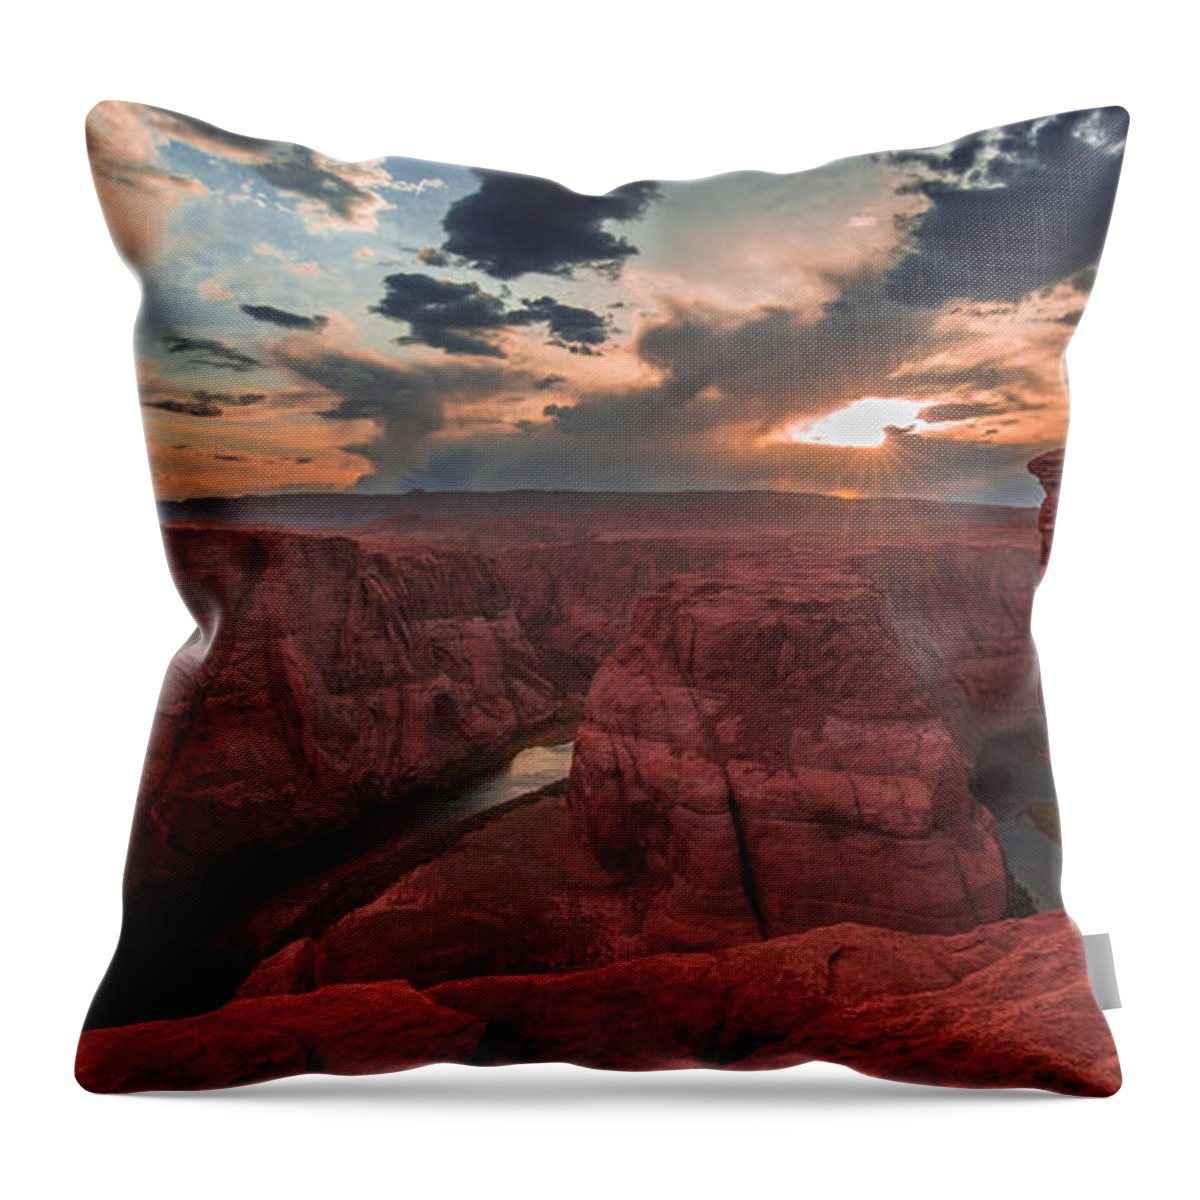 Arizona Throw Pillow featuring the photograph Horseshoe Bend Sunset by Tim Bryan